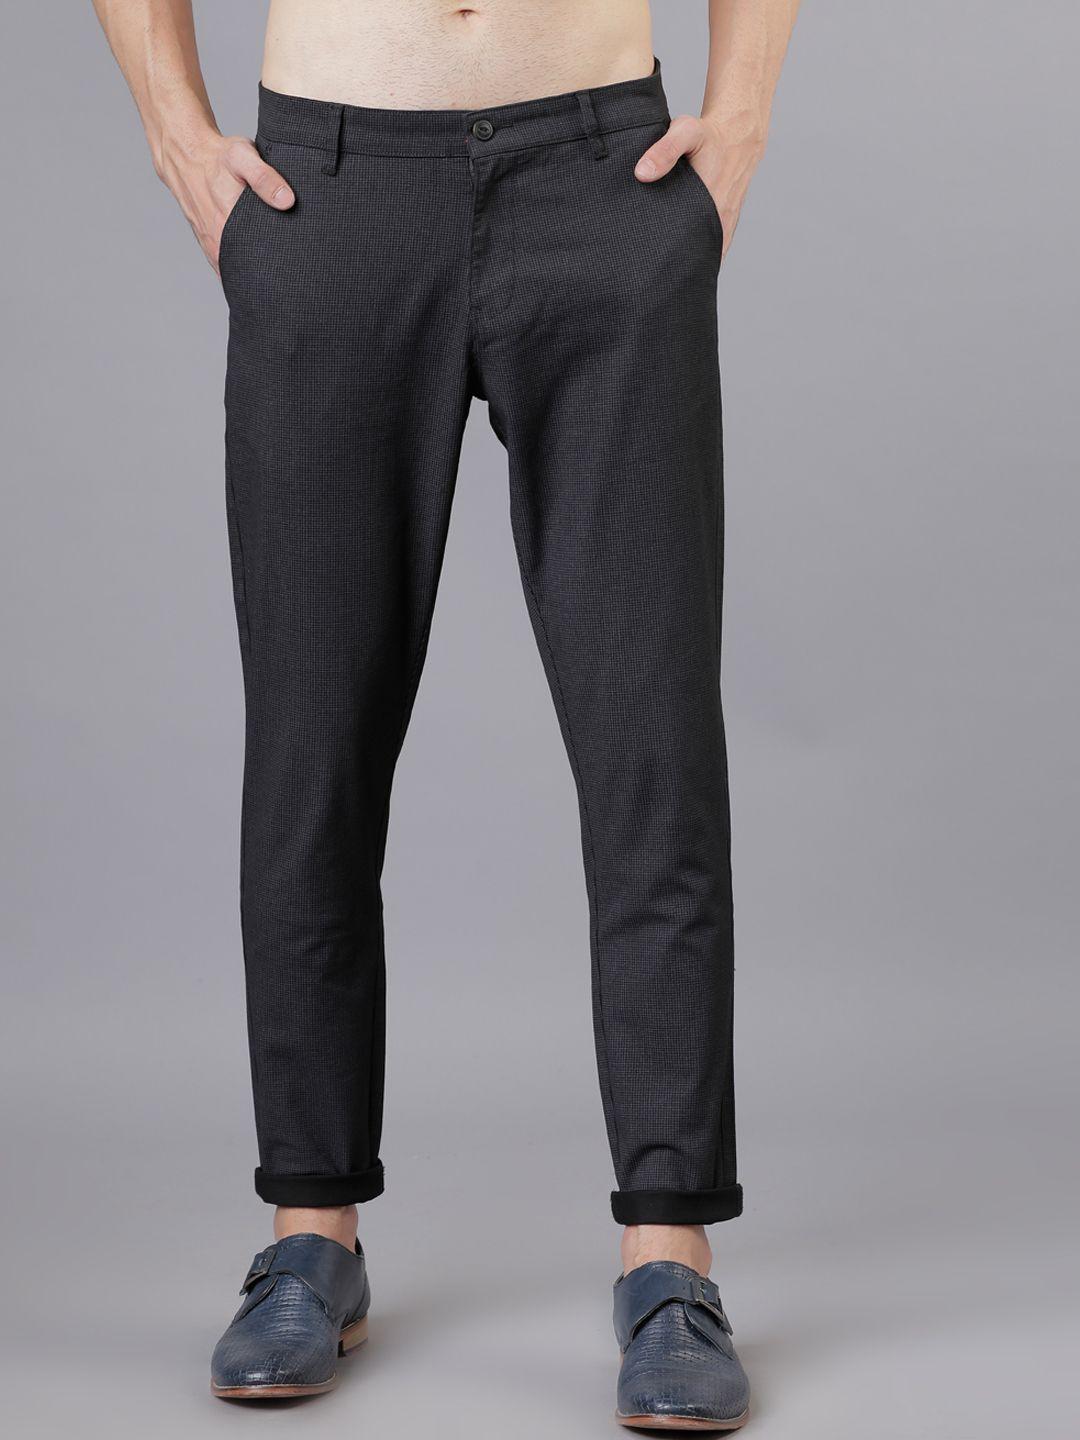 highlander men black & grey slim fit self design regular trousers